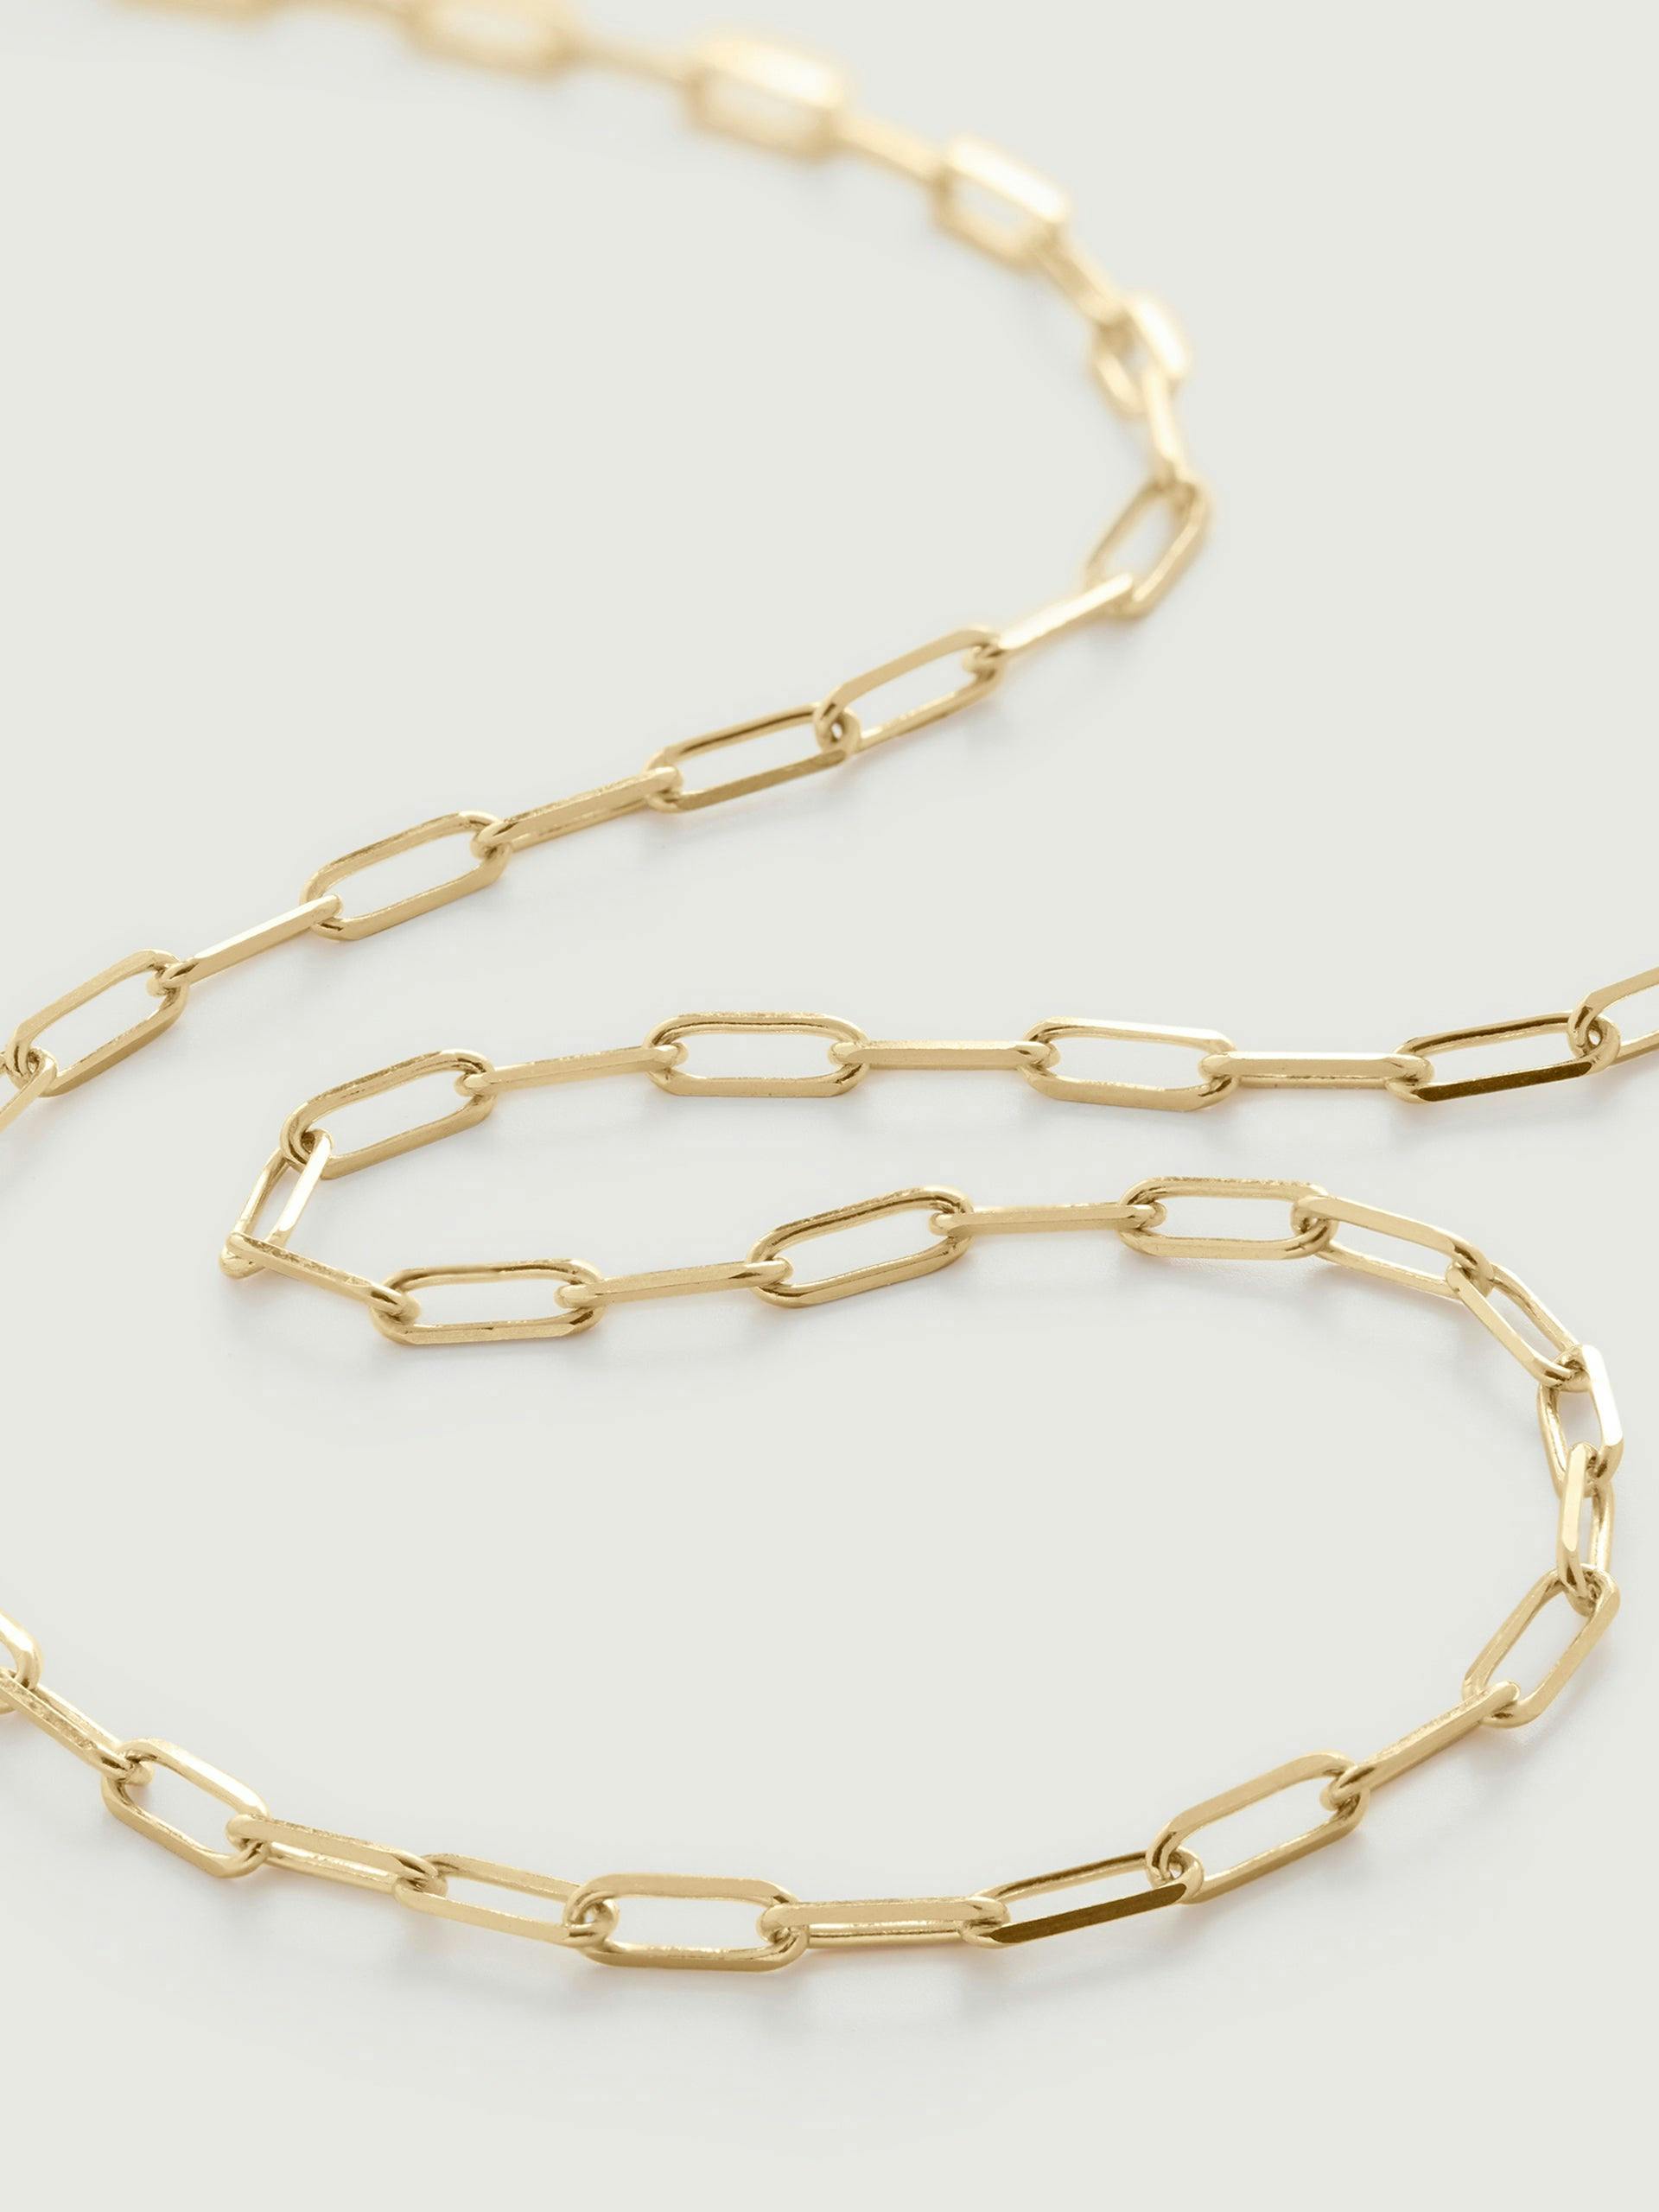 Adjustable paper clip chain necklace